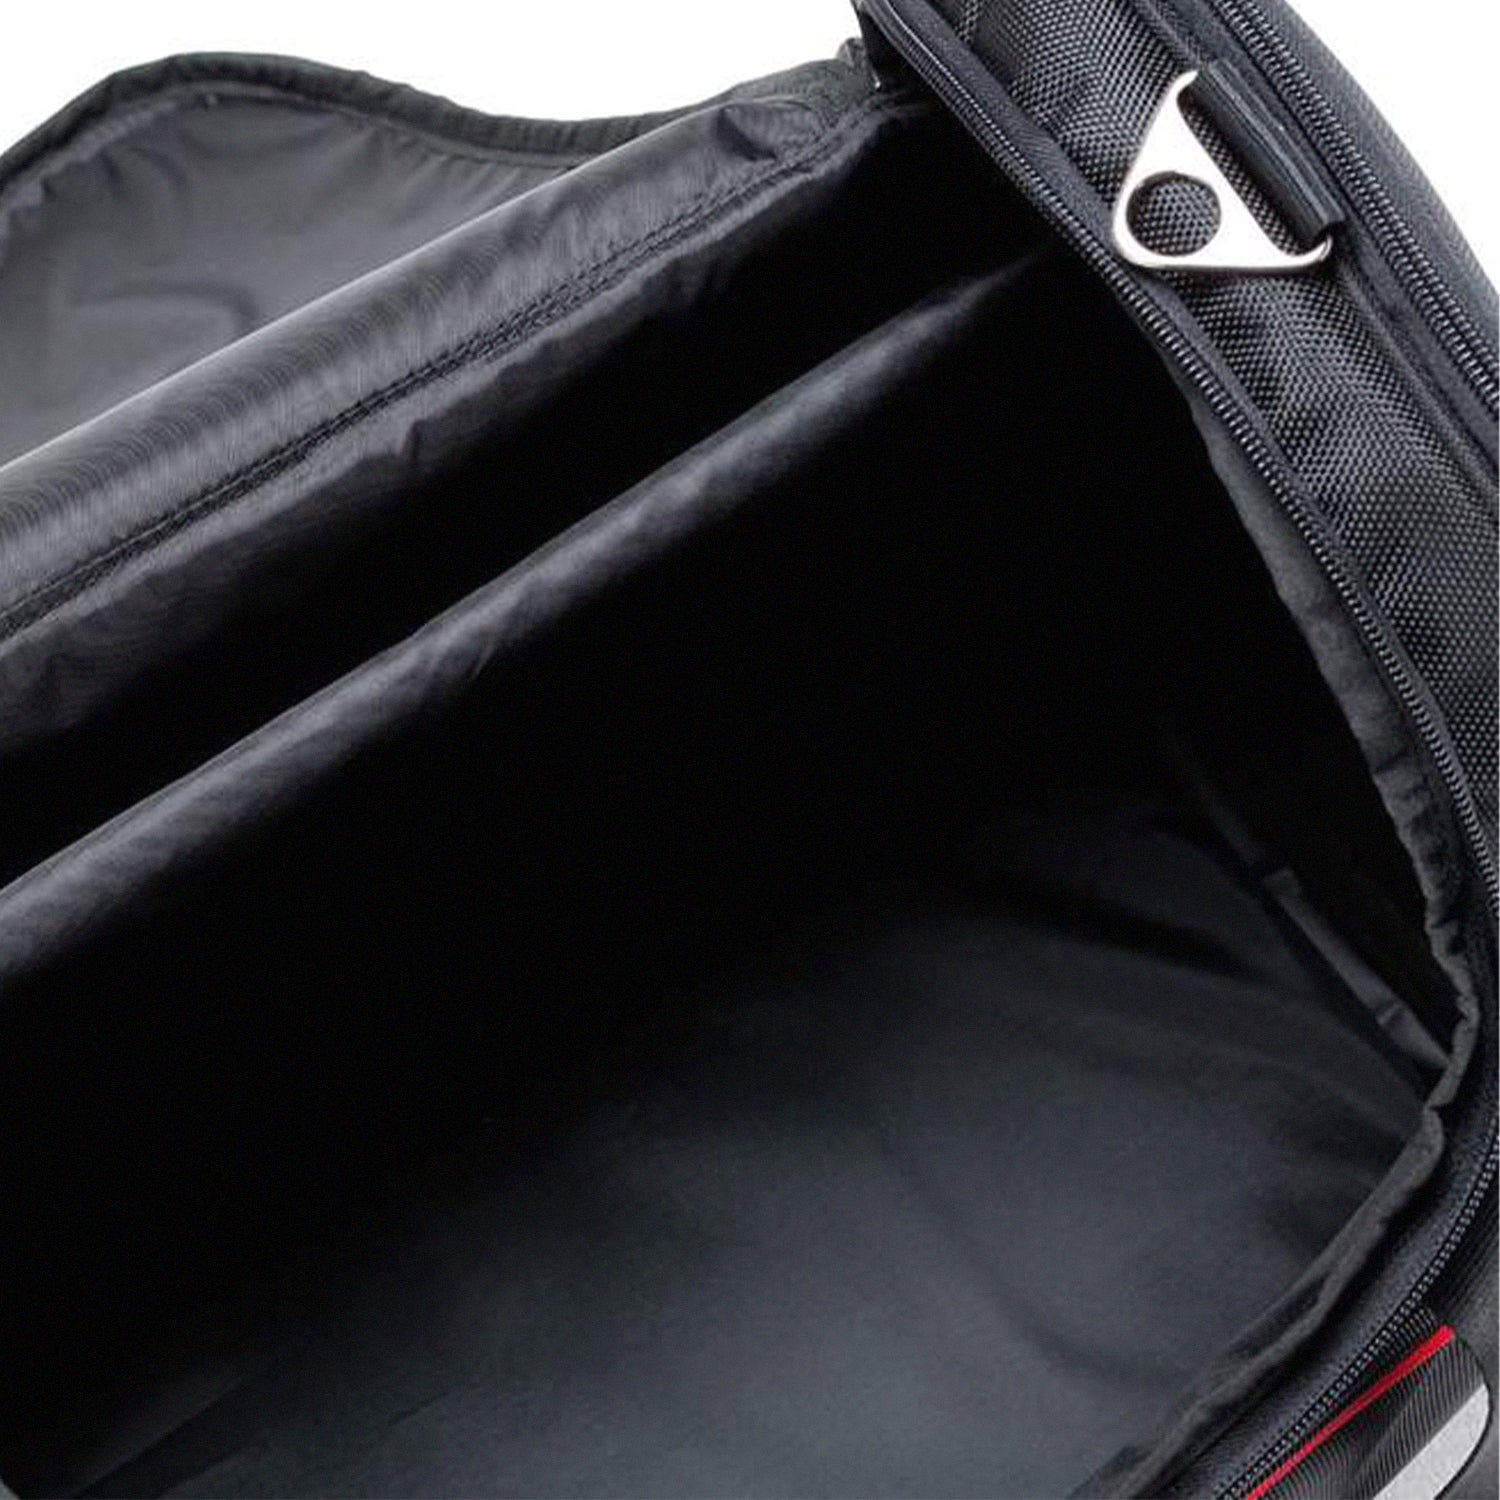 KJUST TESLA MODEL 3 2017-2020 CAR BAGS SET 7 PCS Sport 7 bags